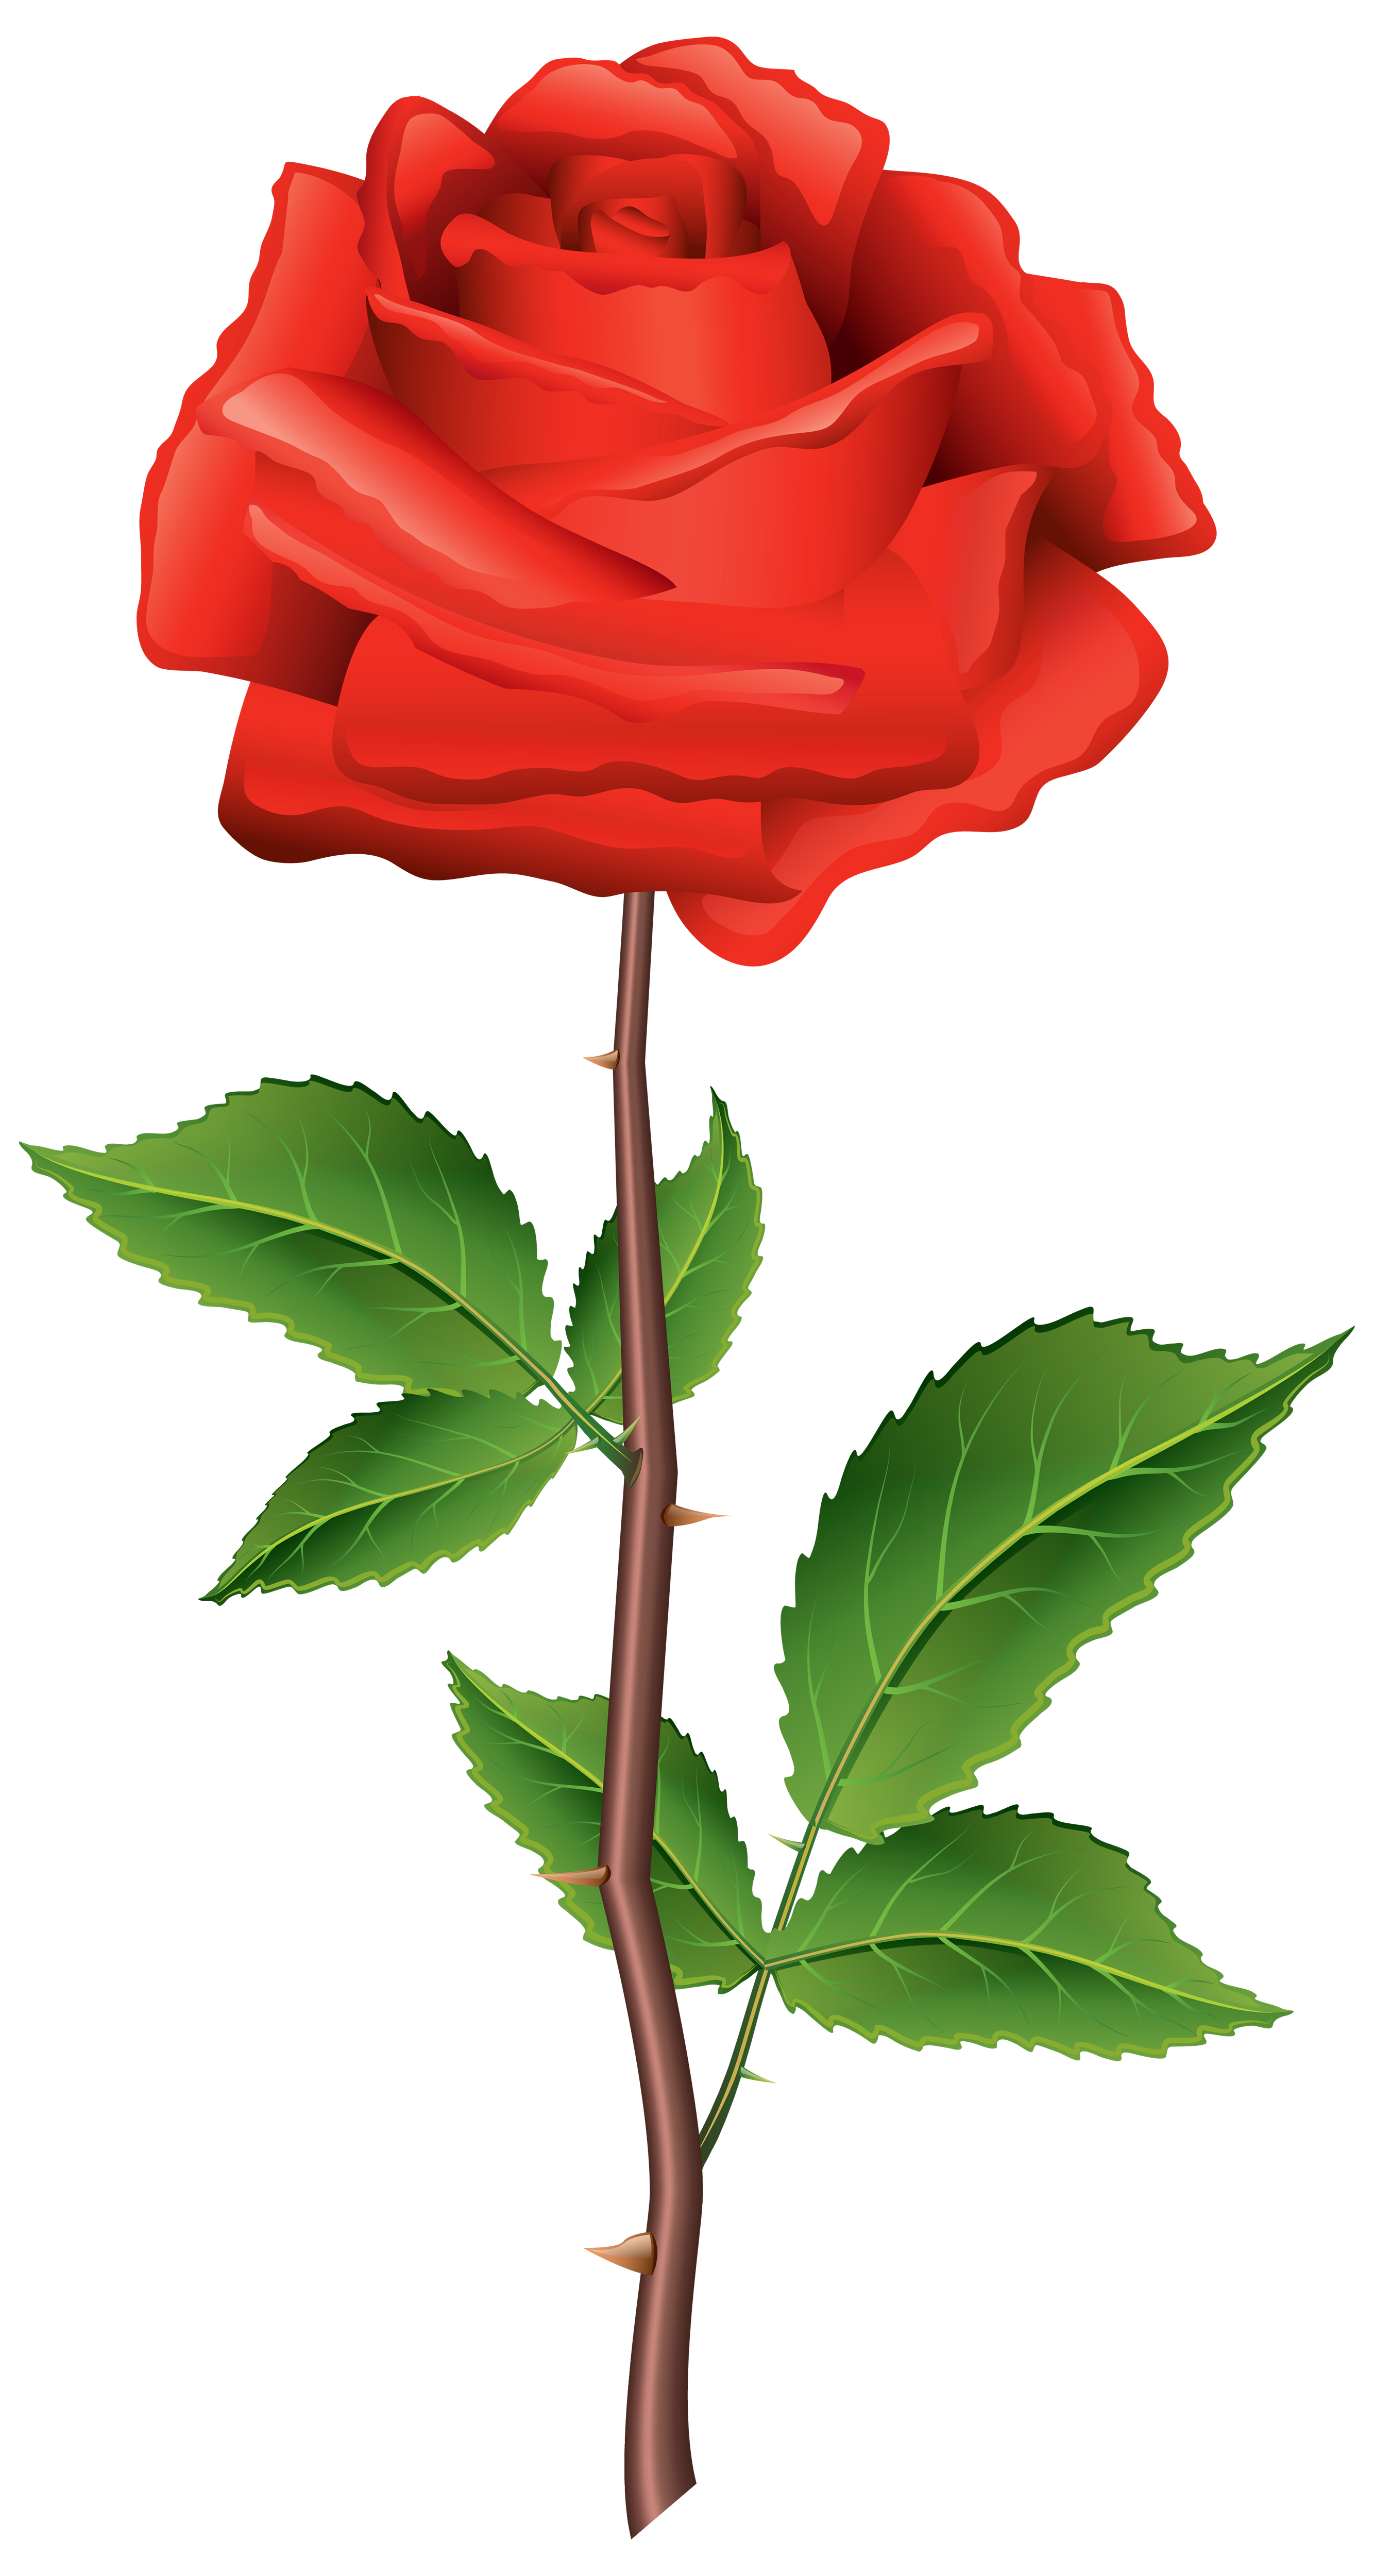 Flower stem png. Red rose clipart best